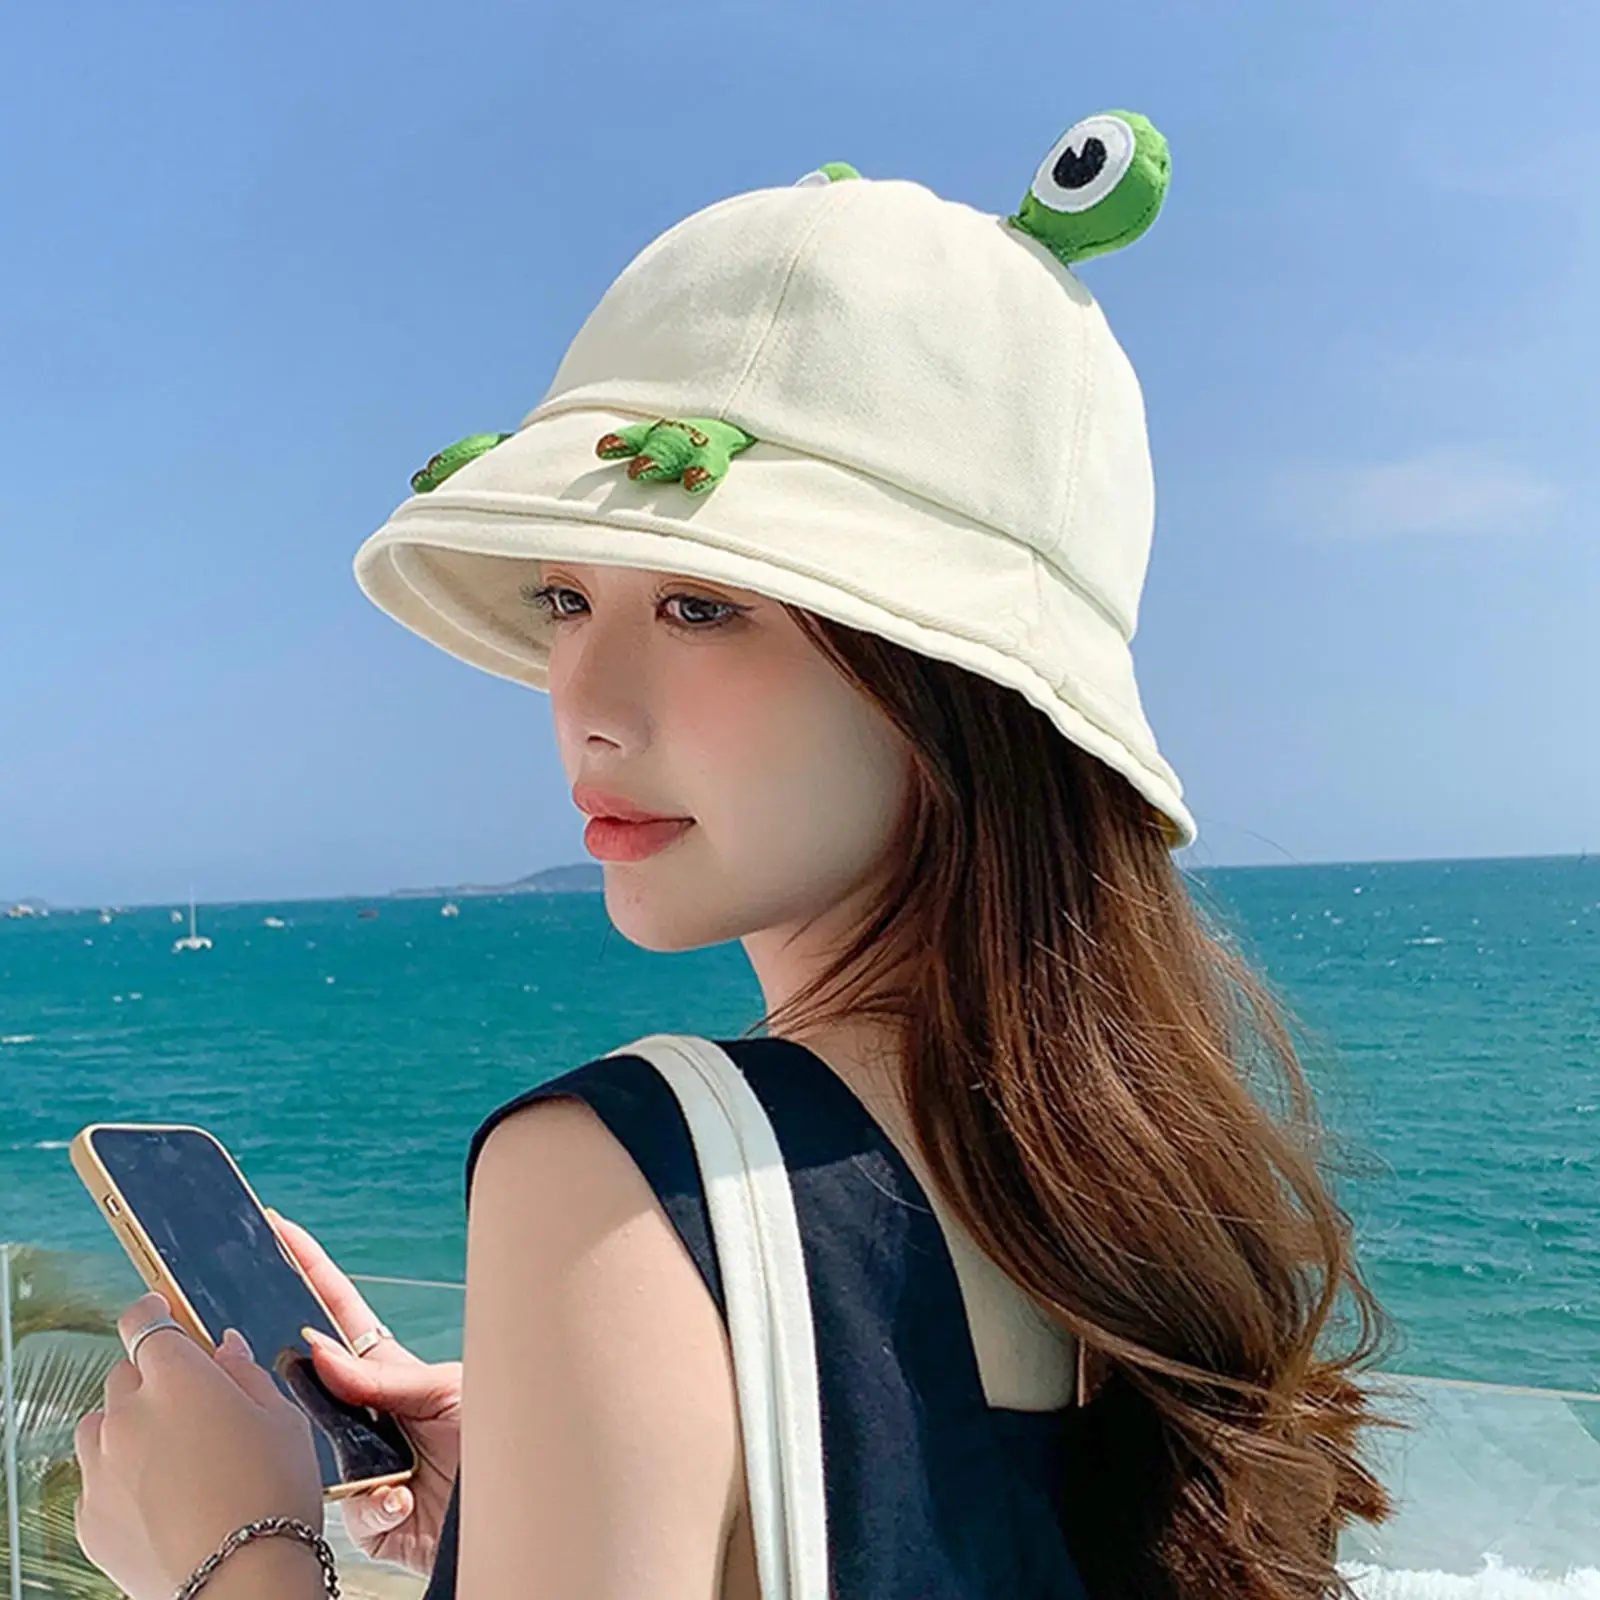 Frog Bucket Hat, Party hat Protection Cotton Wide Brim Adjustable Cute Fisherman Caps for Fancy Dress Outdoor women Teens